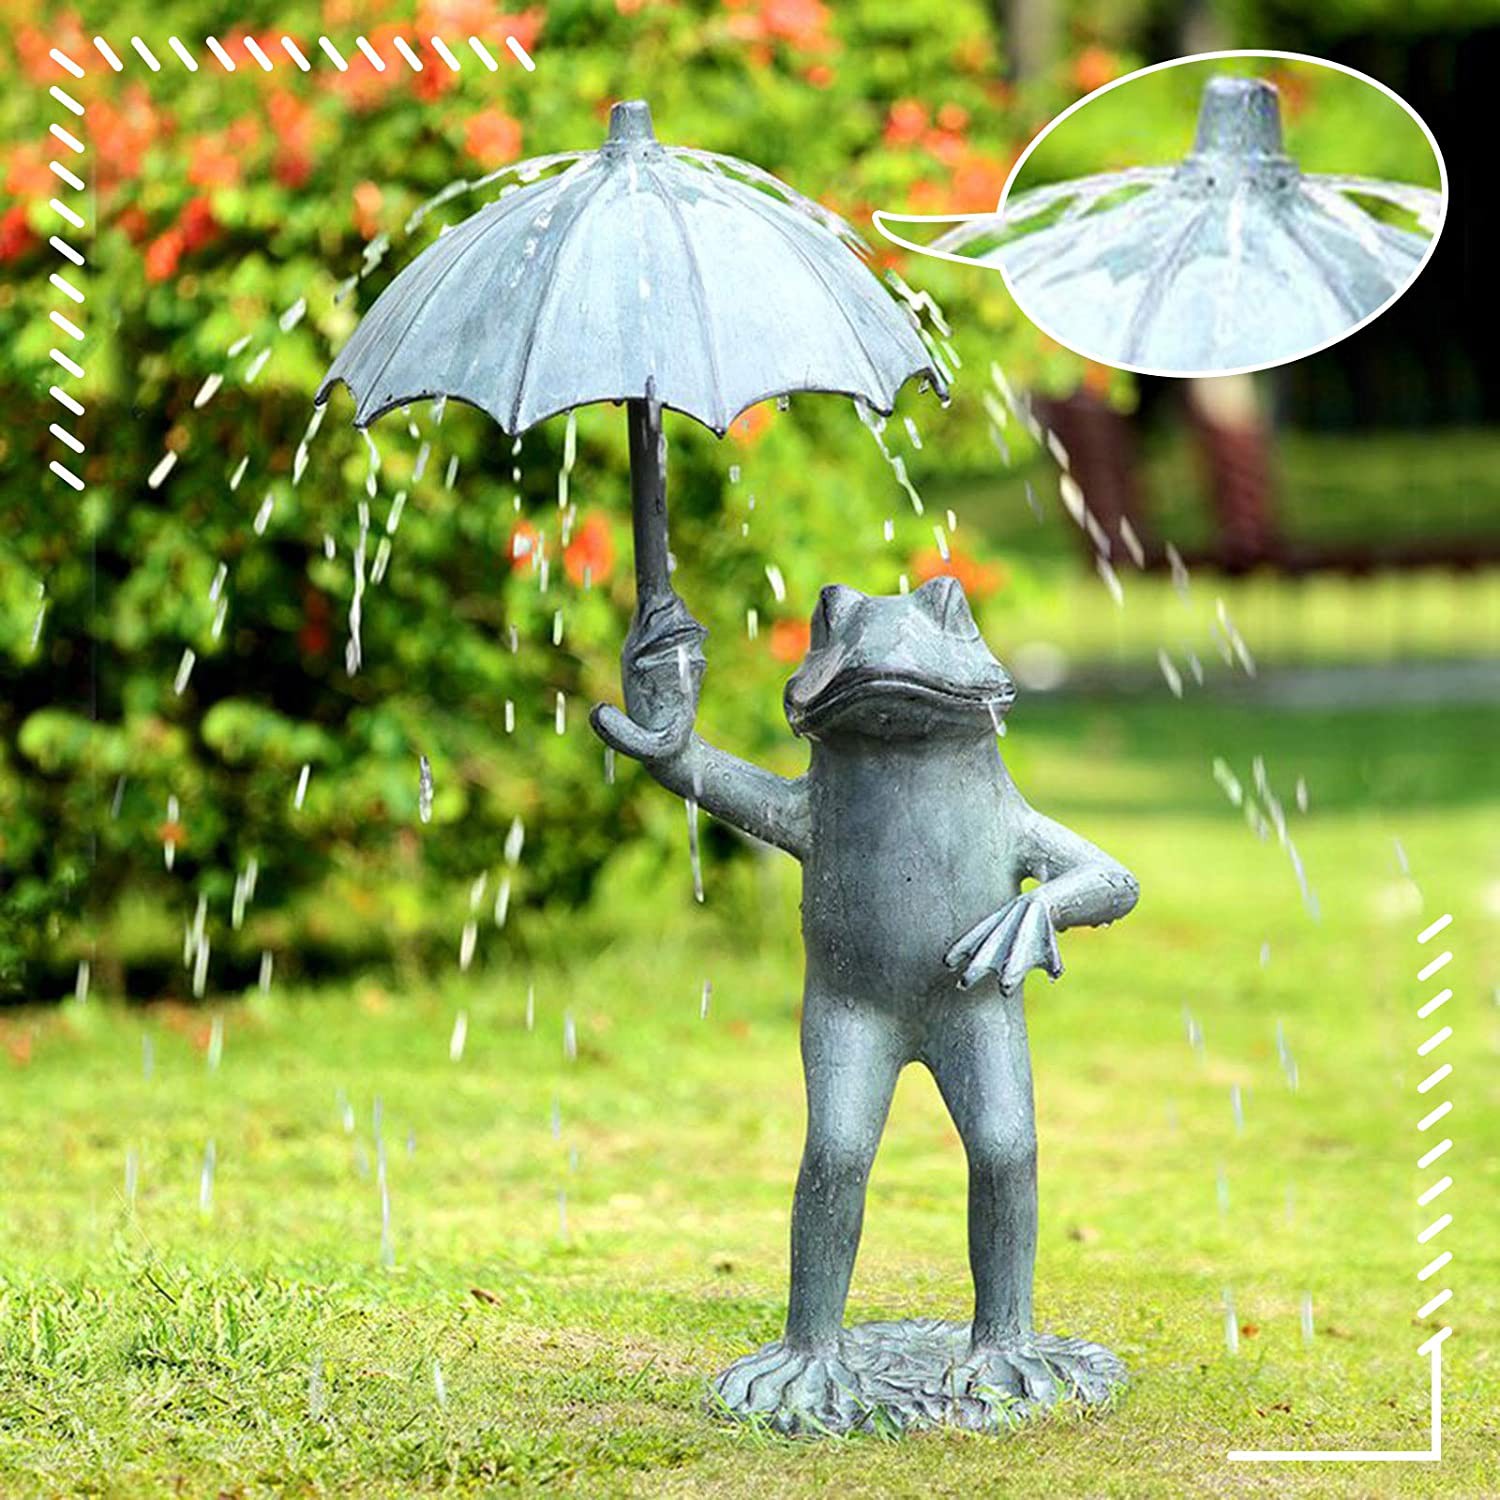 ☆YOLA☆ Spitter Resin Frog Home Umbrella Frog Statue Animal Sculpture Carving Decoration Patio Decor Garden Landscape Handicraft Exquisite Figurine